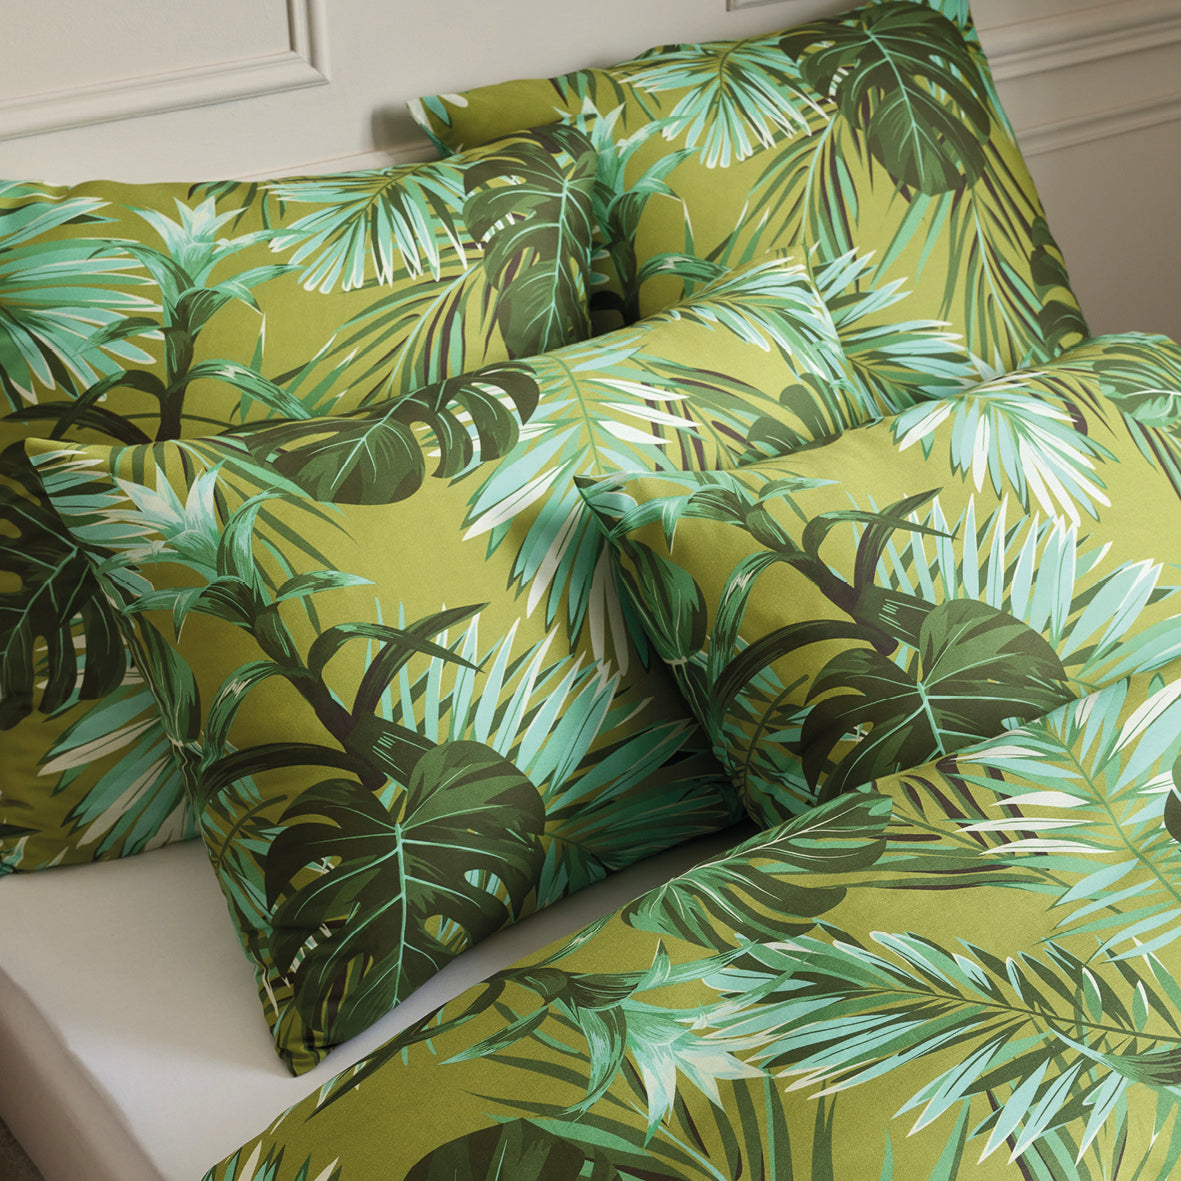 Duvet cover + pillowcase(s) cotton satin - Tropical Light green